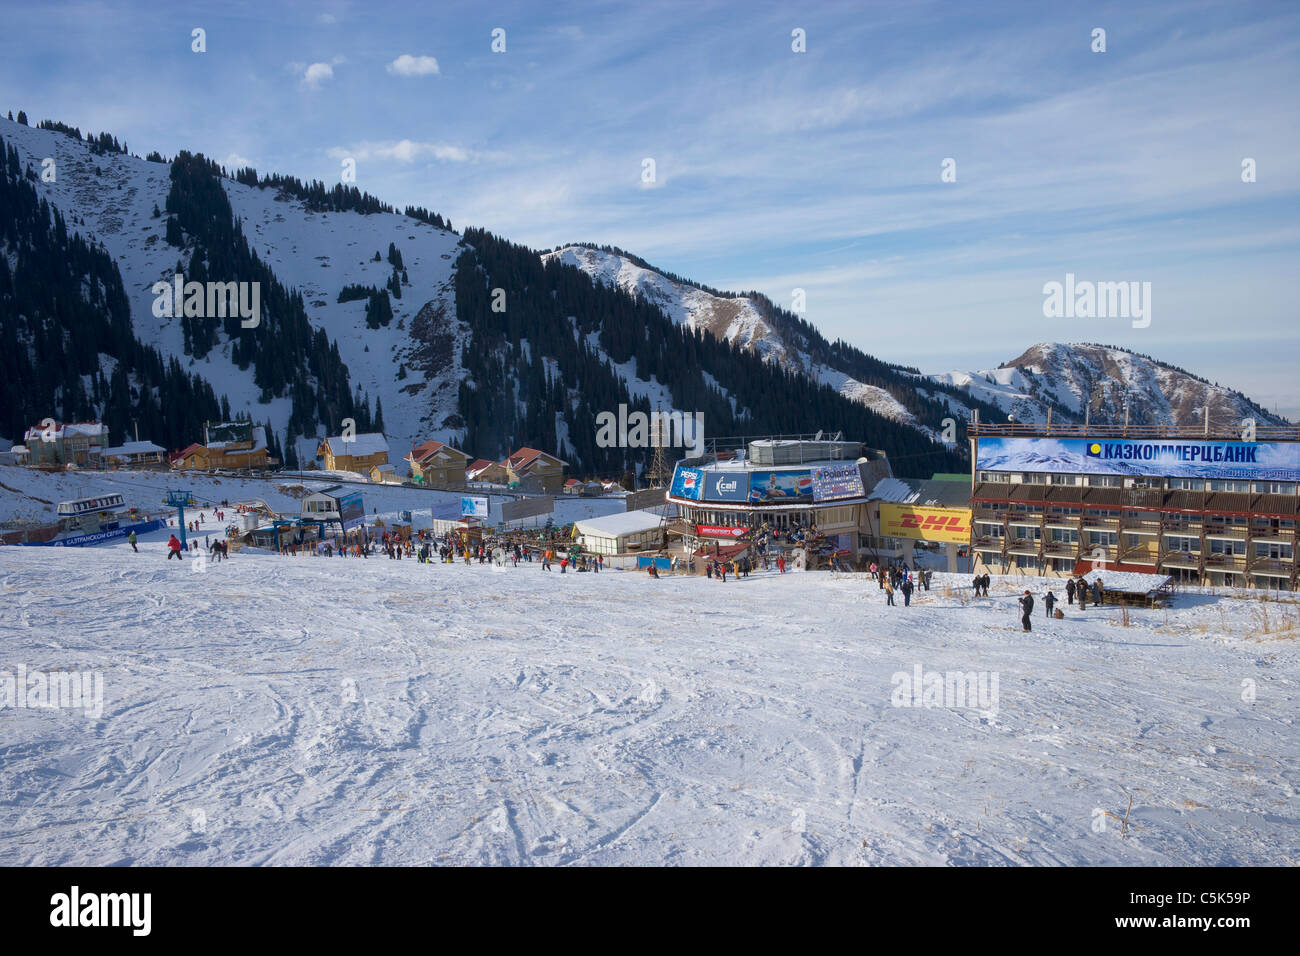 Snowy ski resort of Chimbulak, Kazakhstan Stock Photo